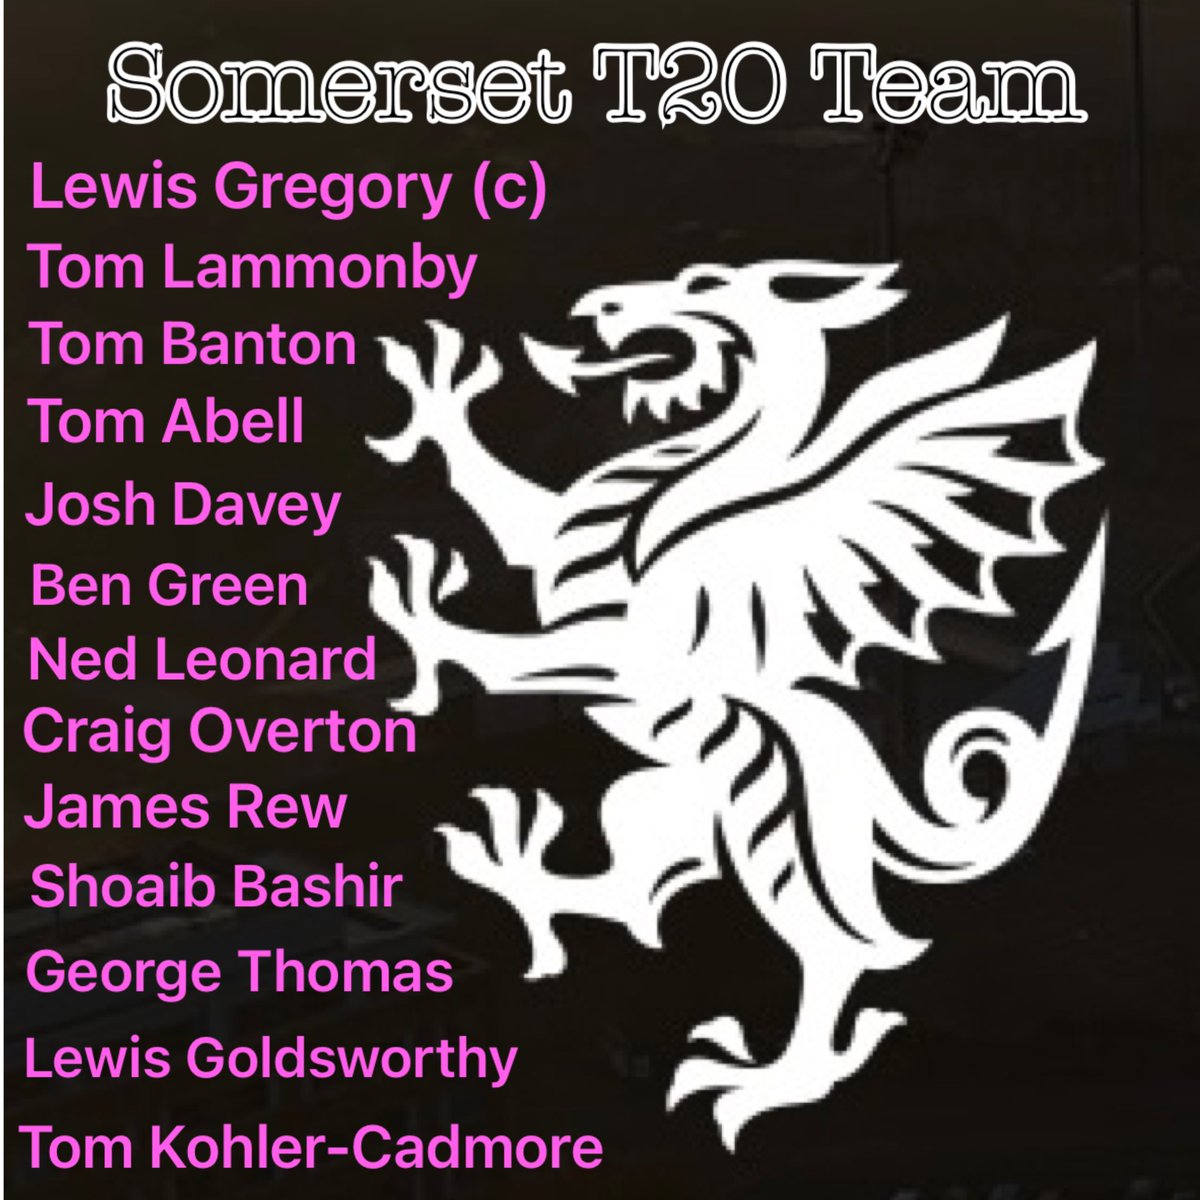 Somerset CCC T20 Team for tomorrows game at Taunton Vale @SomersetCCC 17:30 start